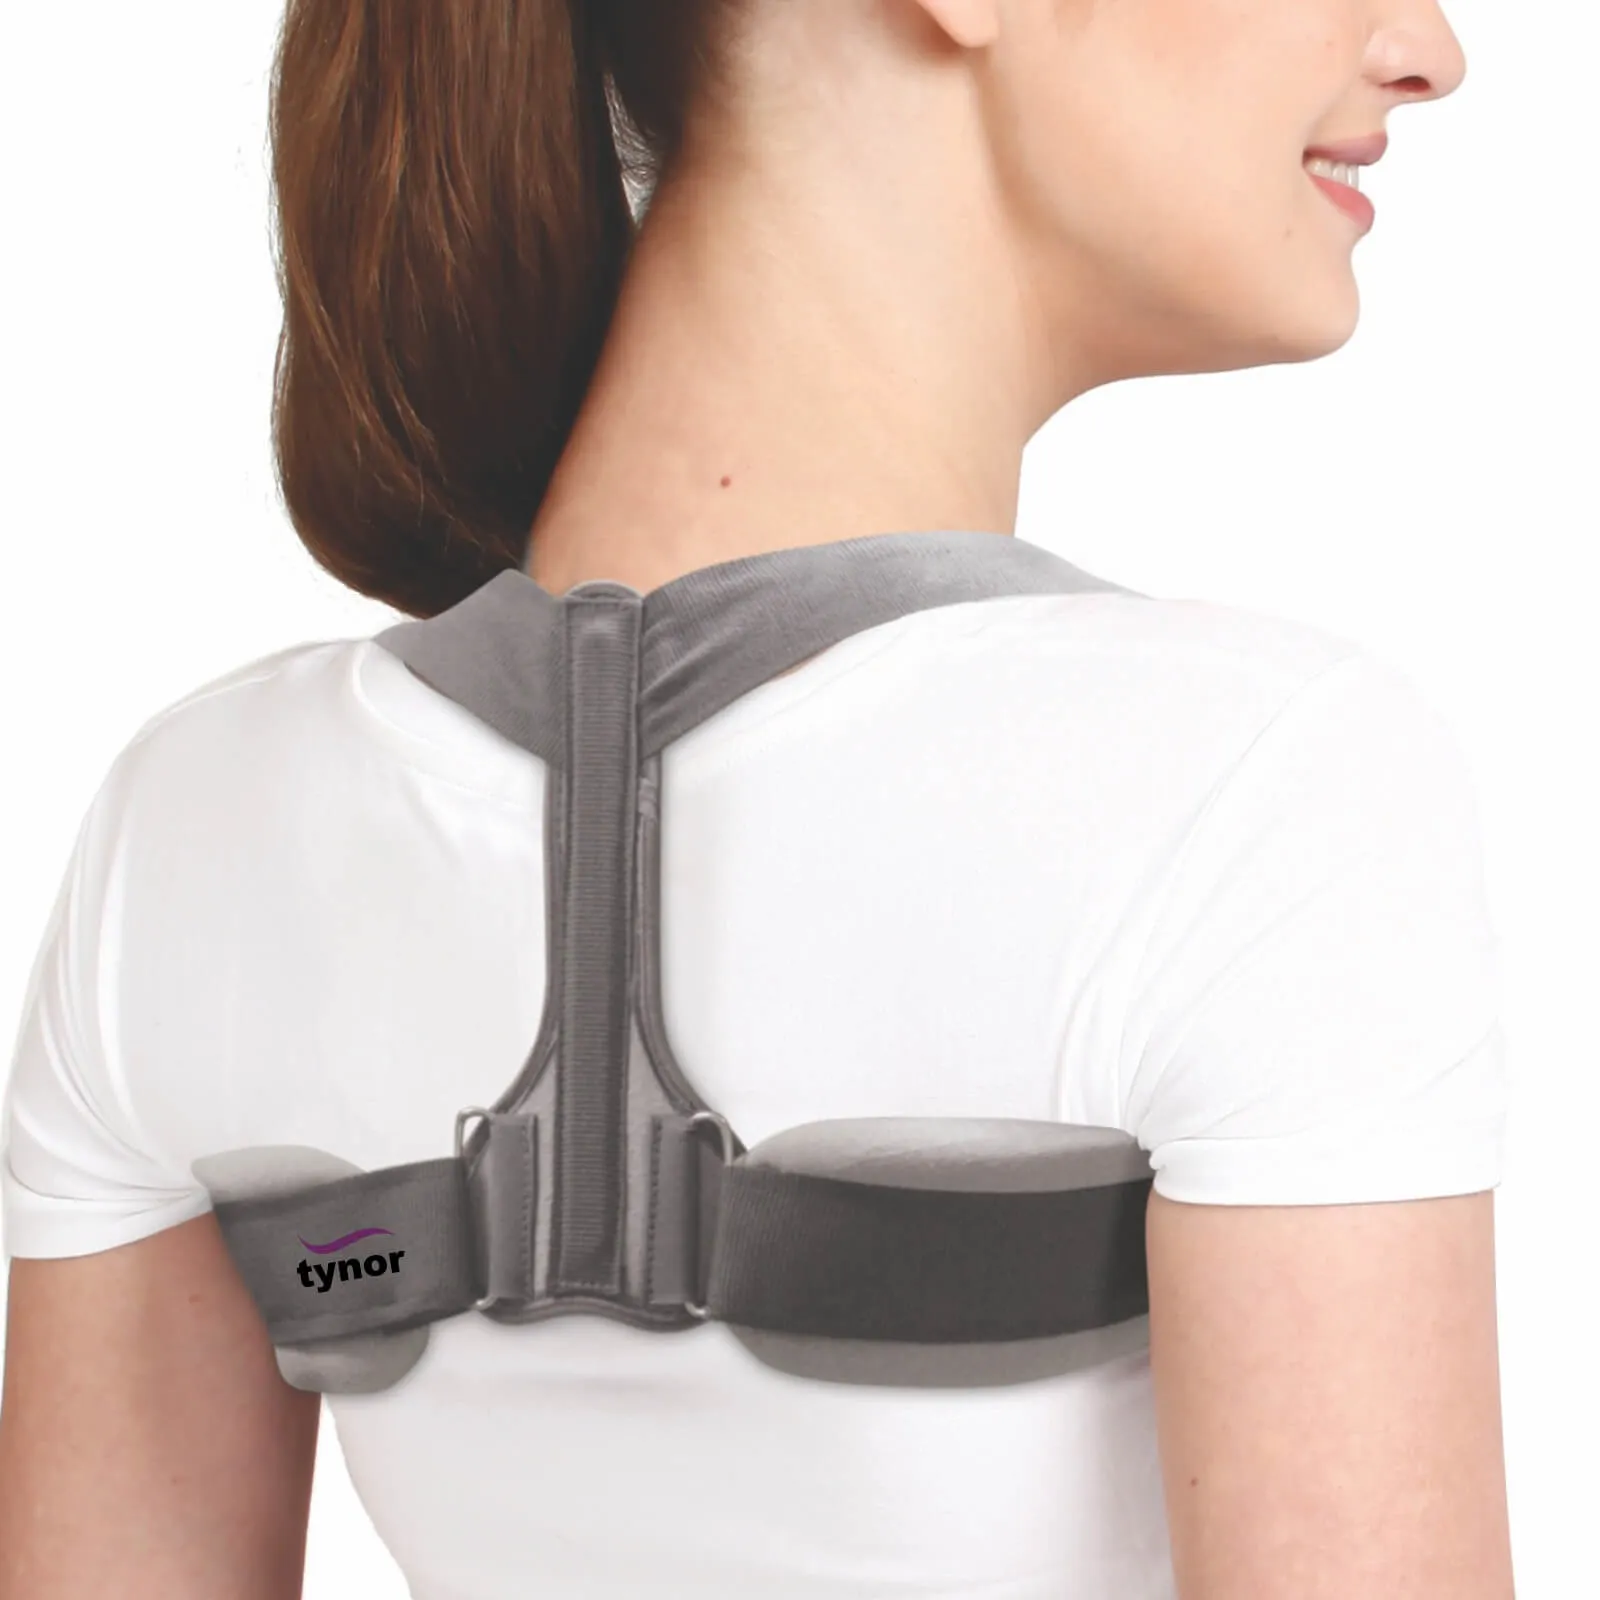 Tynor Contoured Lumbar Support Belt (XL)